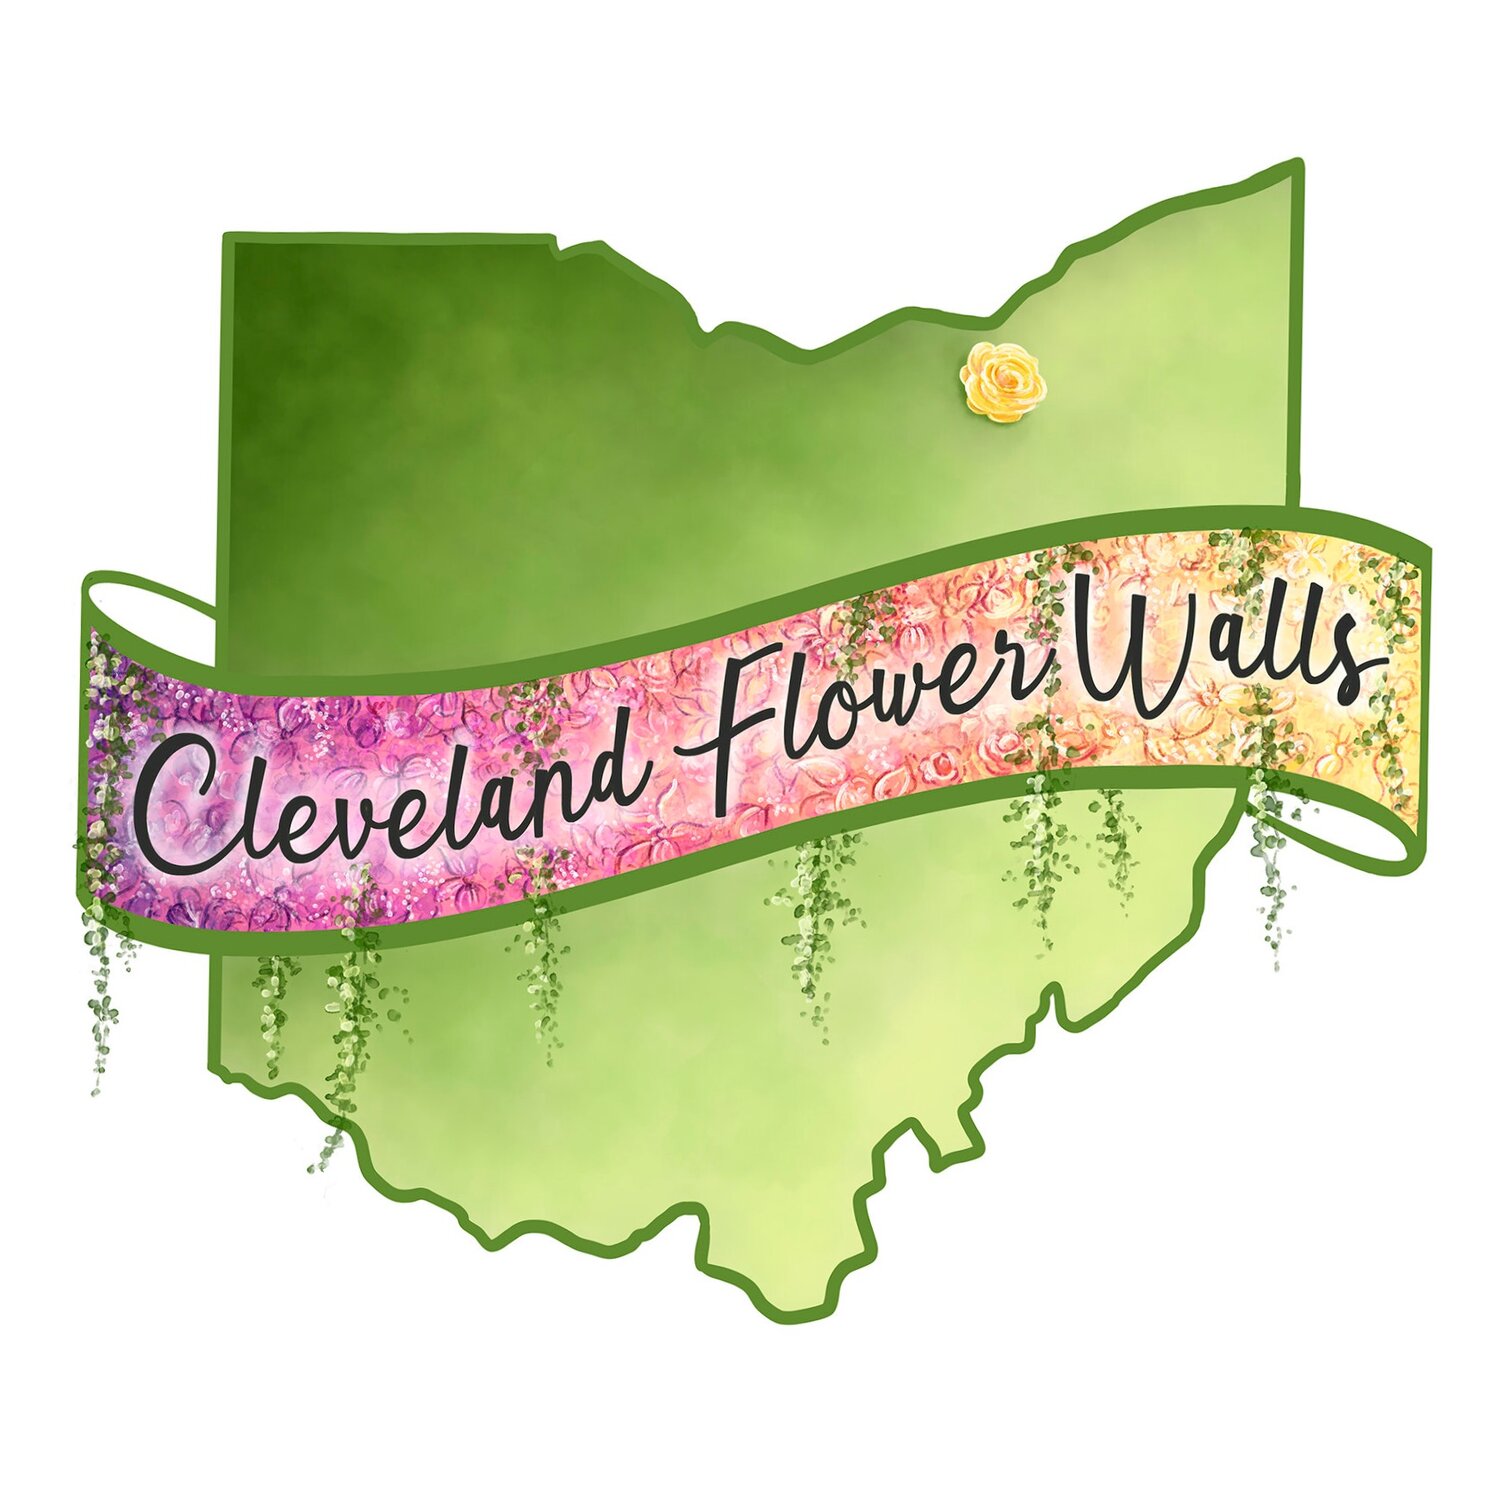 Cleveland Flower Walls